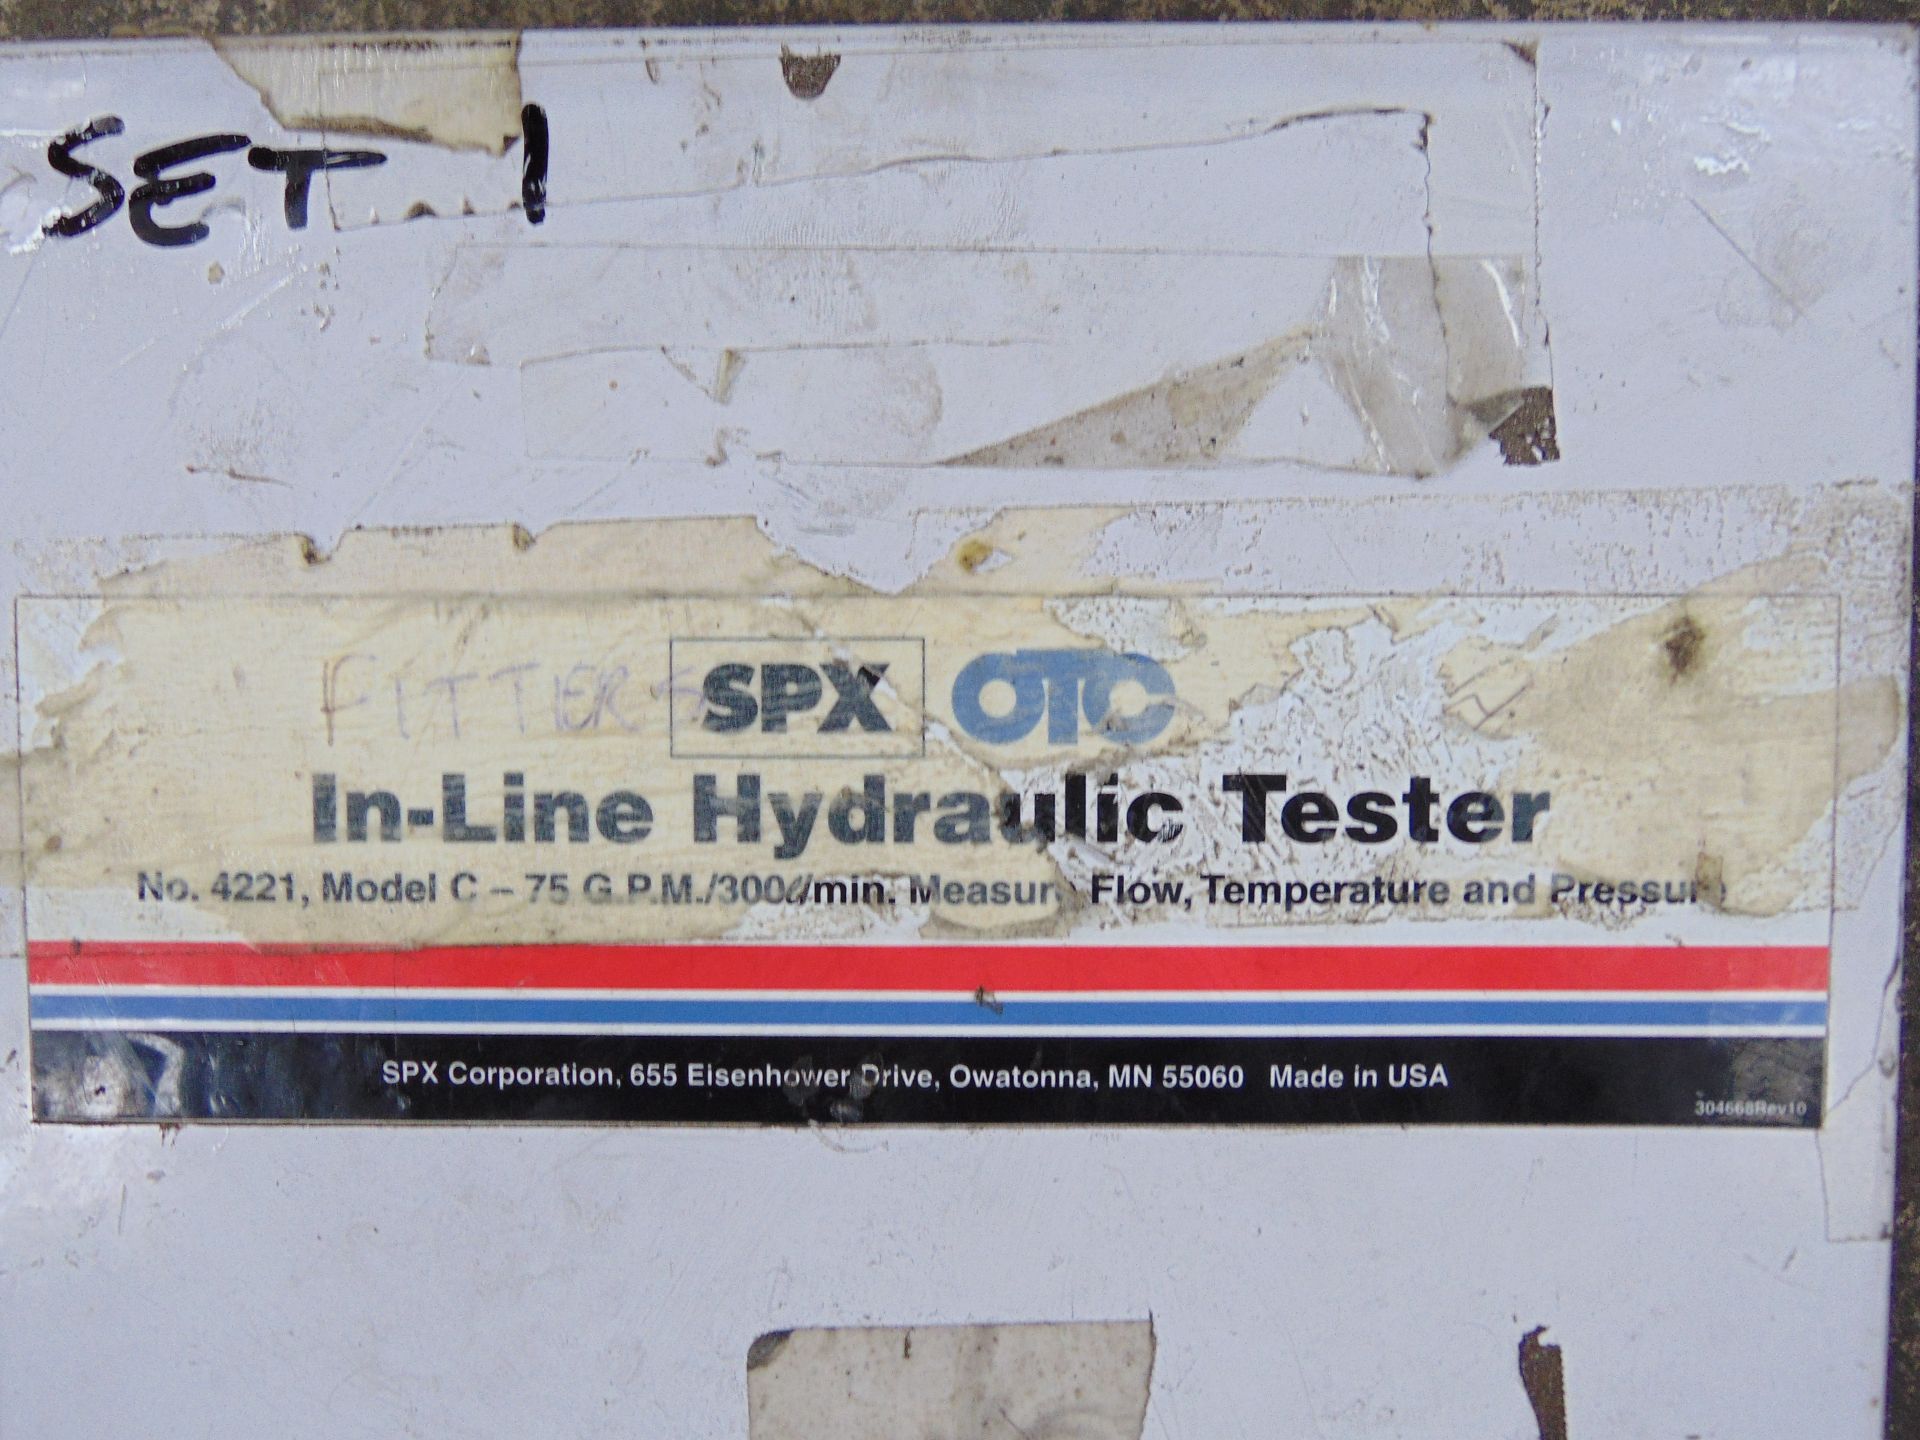 SPX / OTC In-Line Hydraulic Test Kit No. 4221 Model C-75 - Image 7 of 7